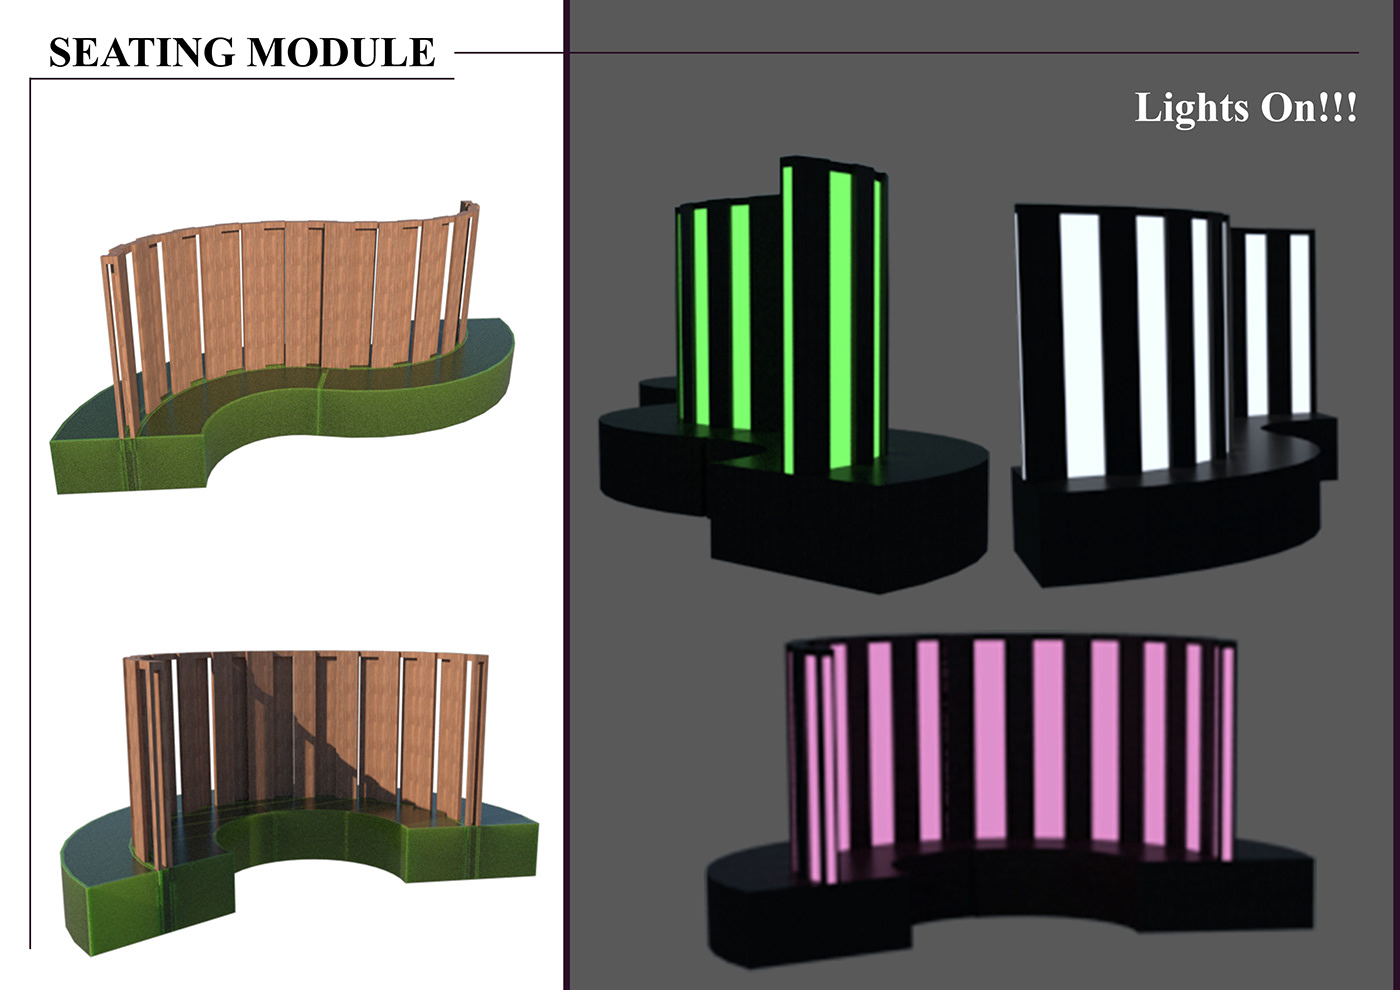 design seat furniture wood Render 3D modern architecture